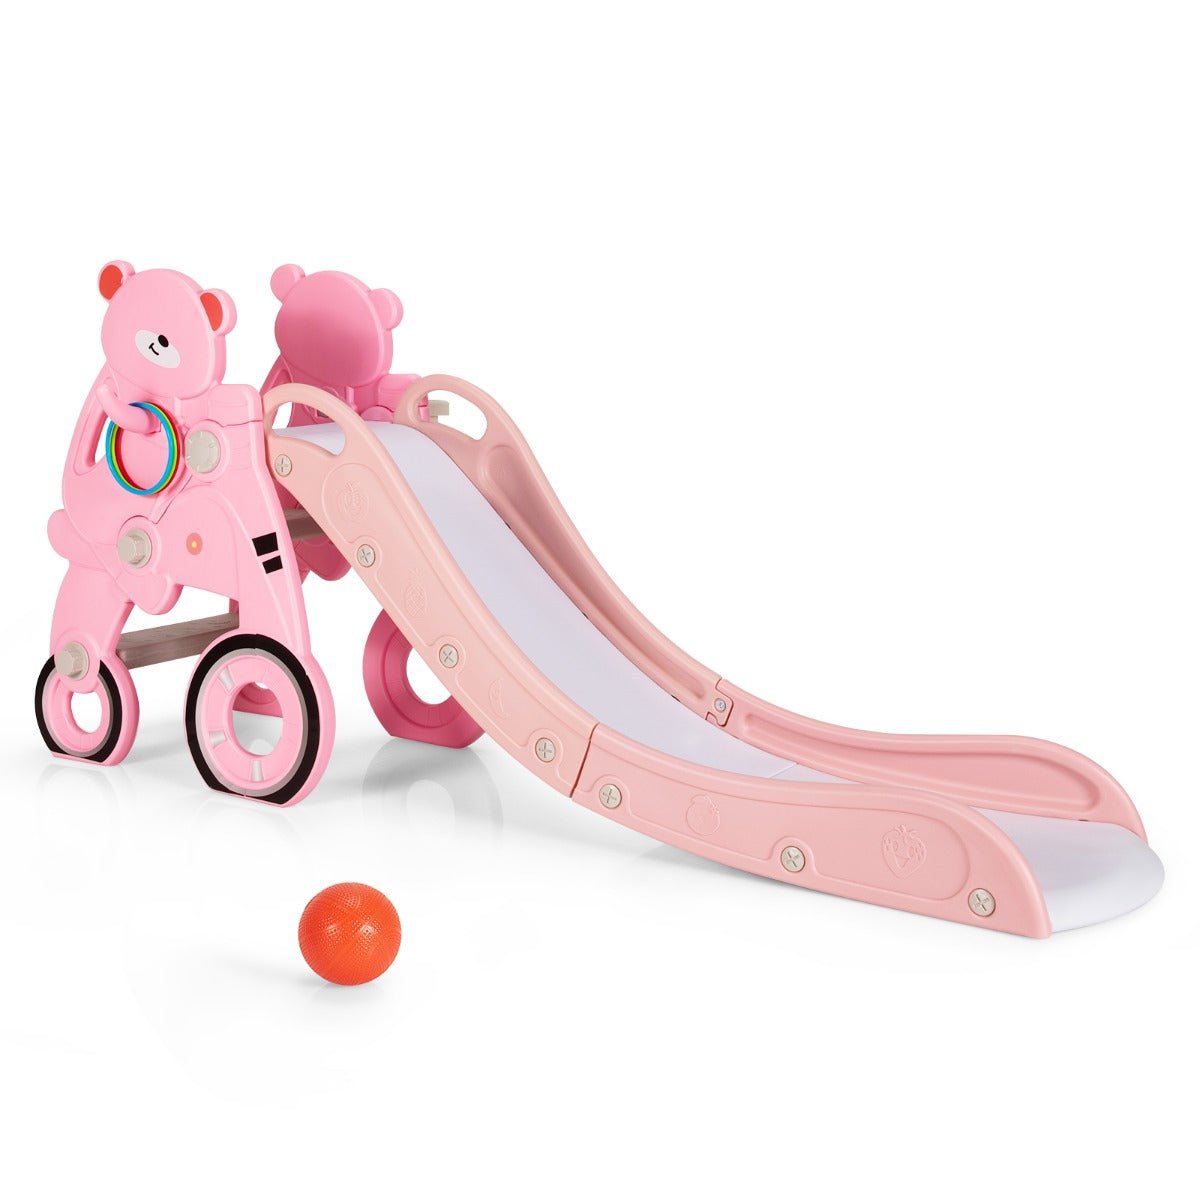 4-in-1 Baby Slide Playset with Basketball Hoop - Pink